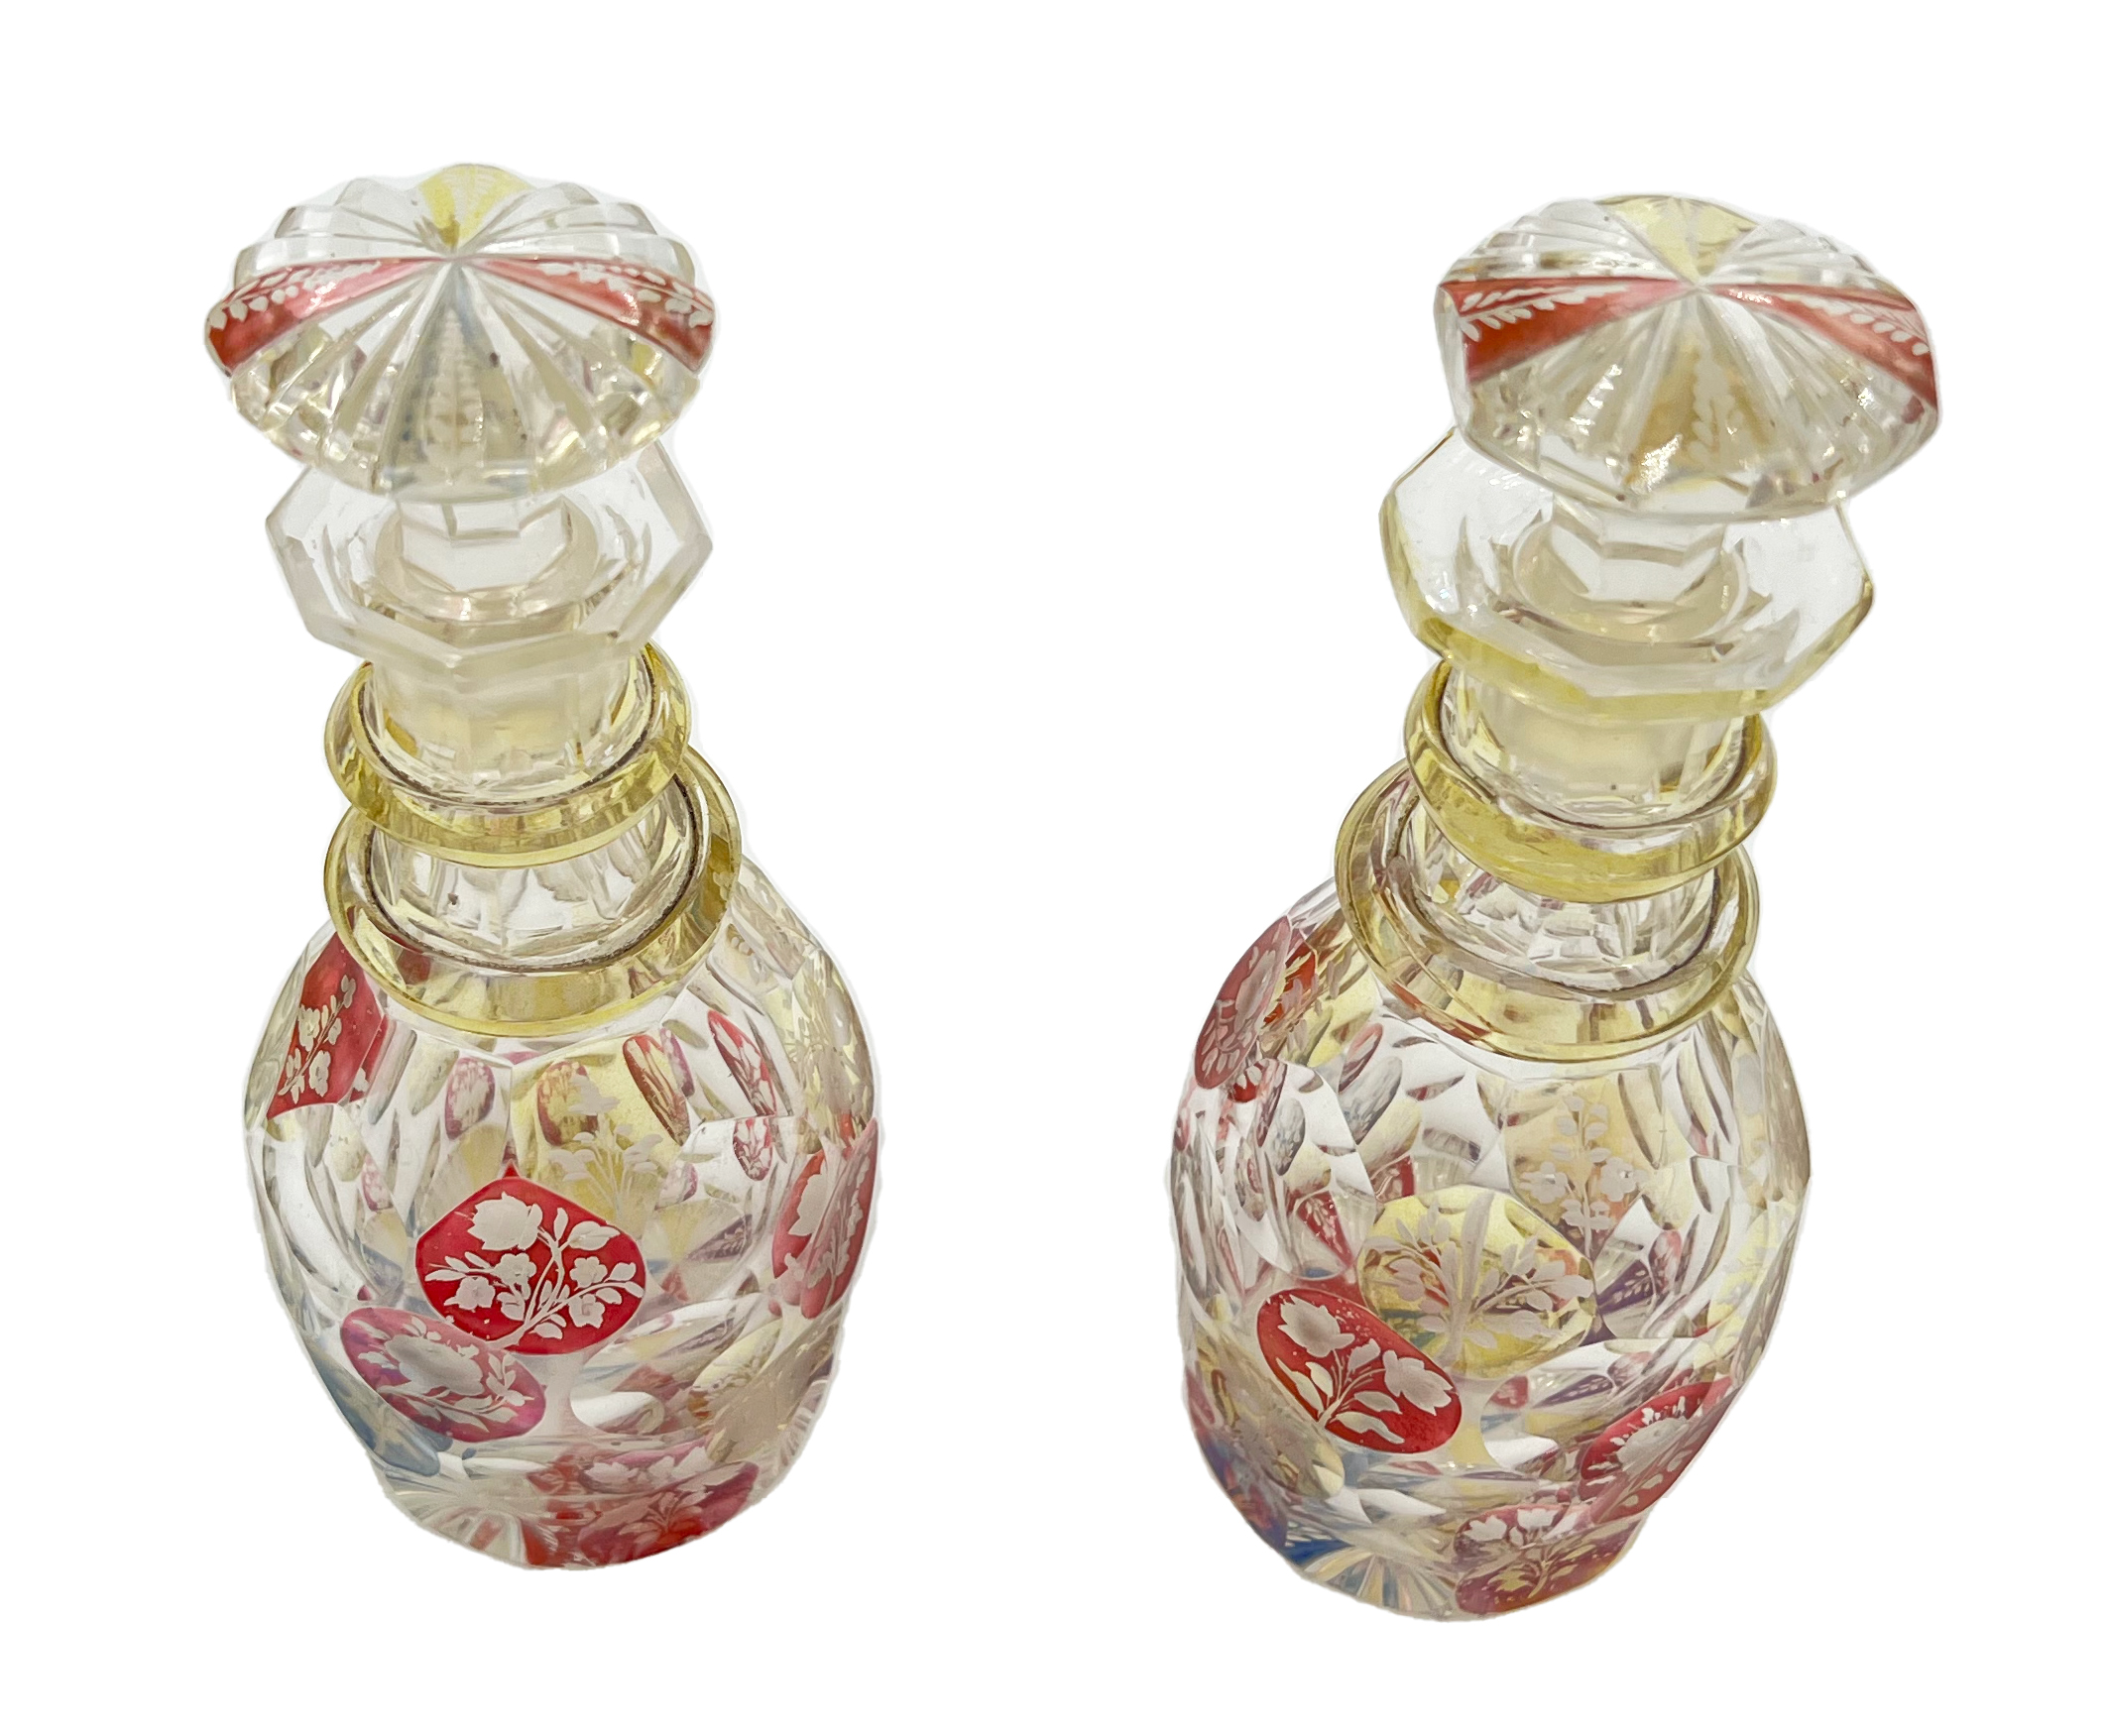 PAIR OF BOHEMIAN GLASS PERFUME BOTTLES - Image 2 of 2